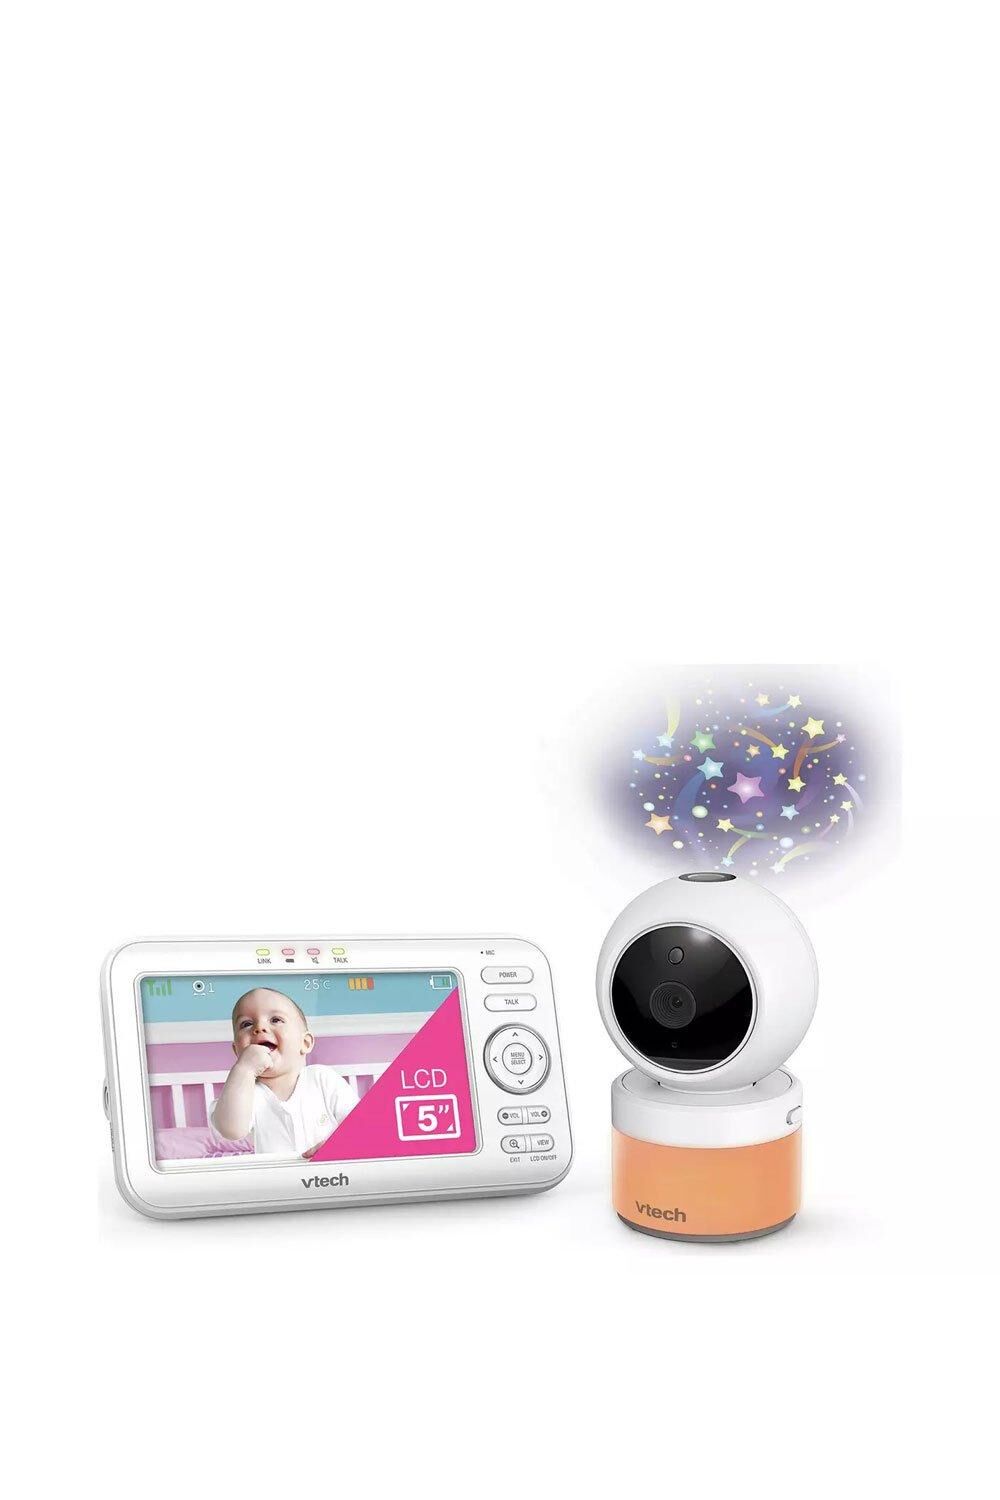 V-Tech 5 inch Digital Video Baby Monitor with Pan & Tilt Camera